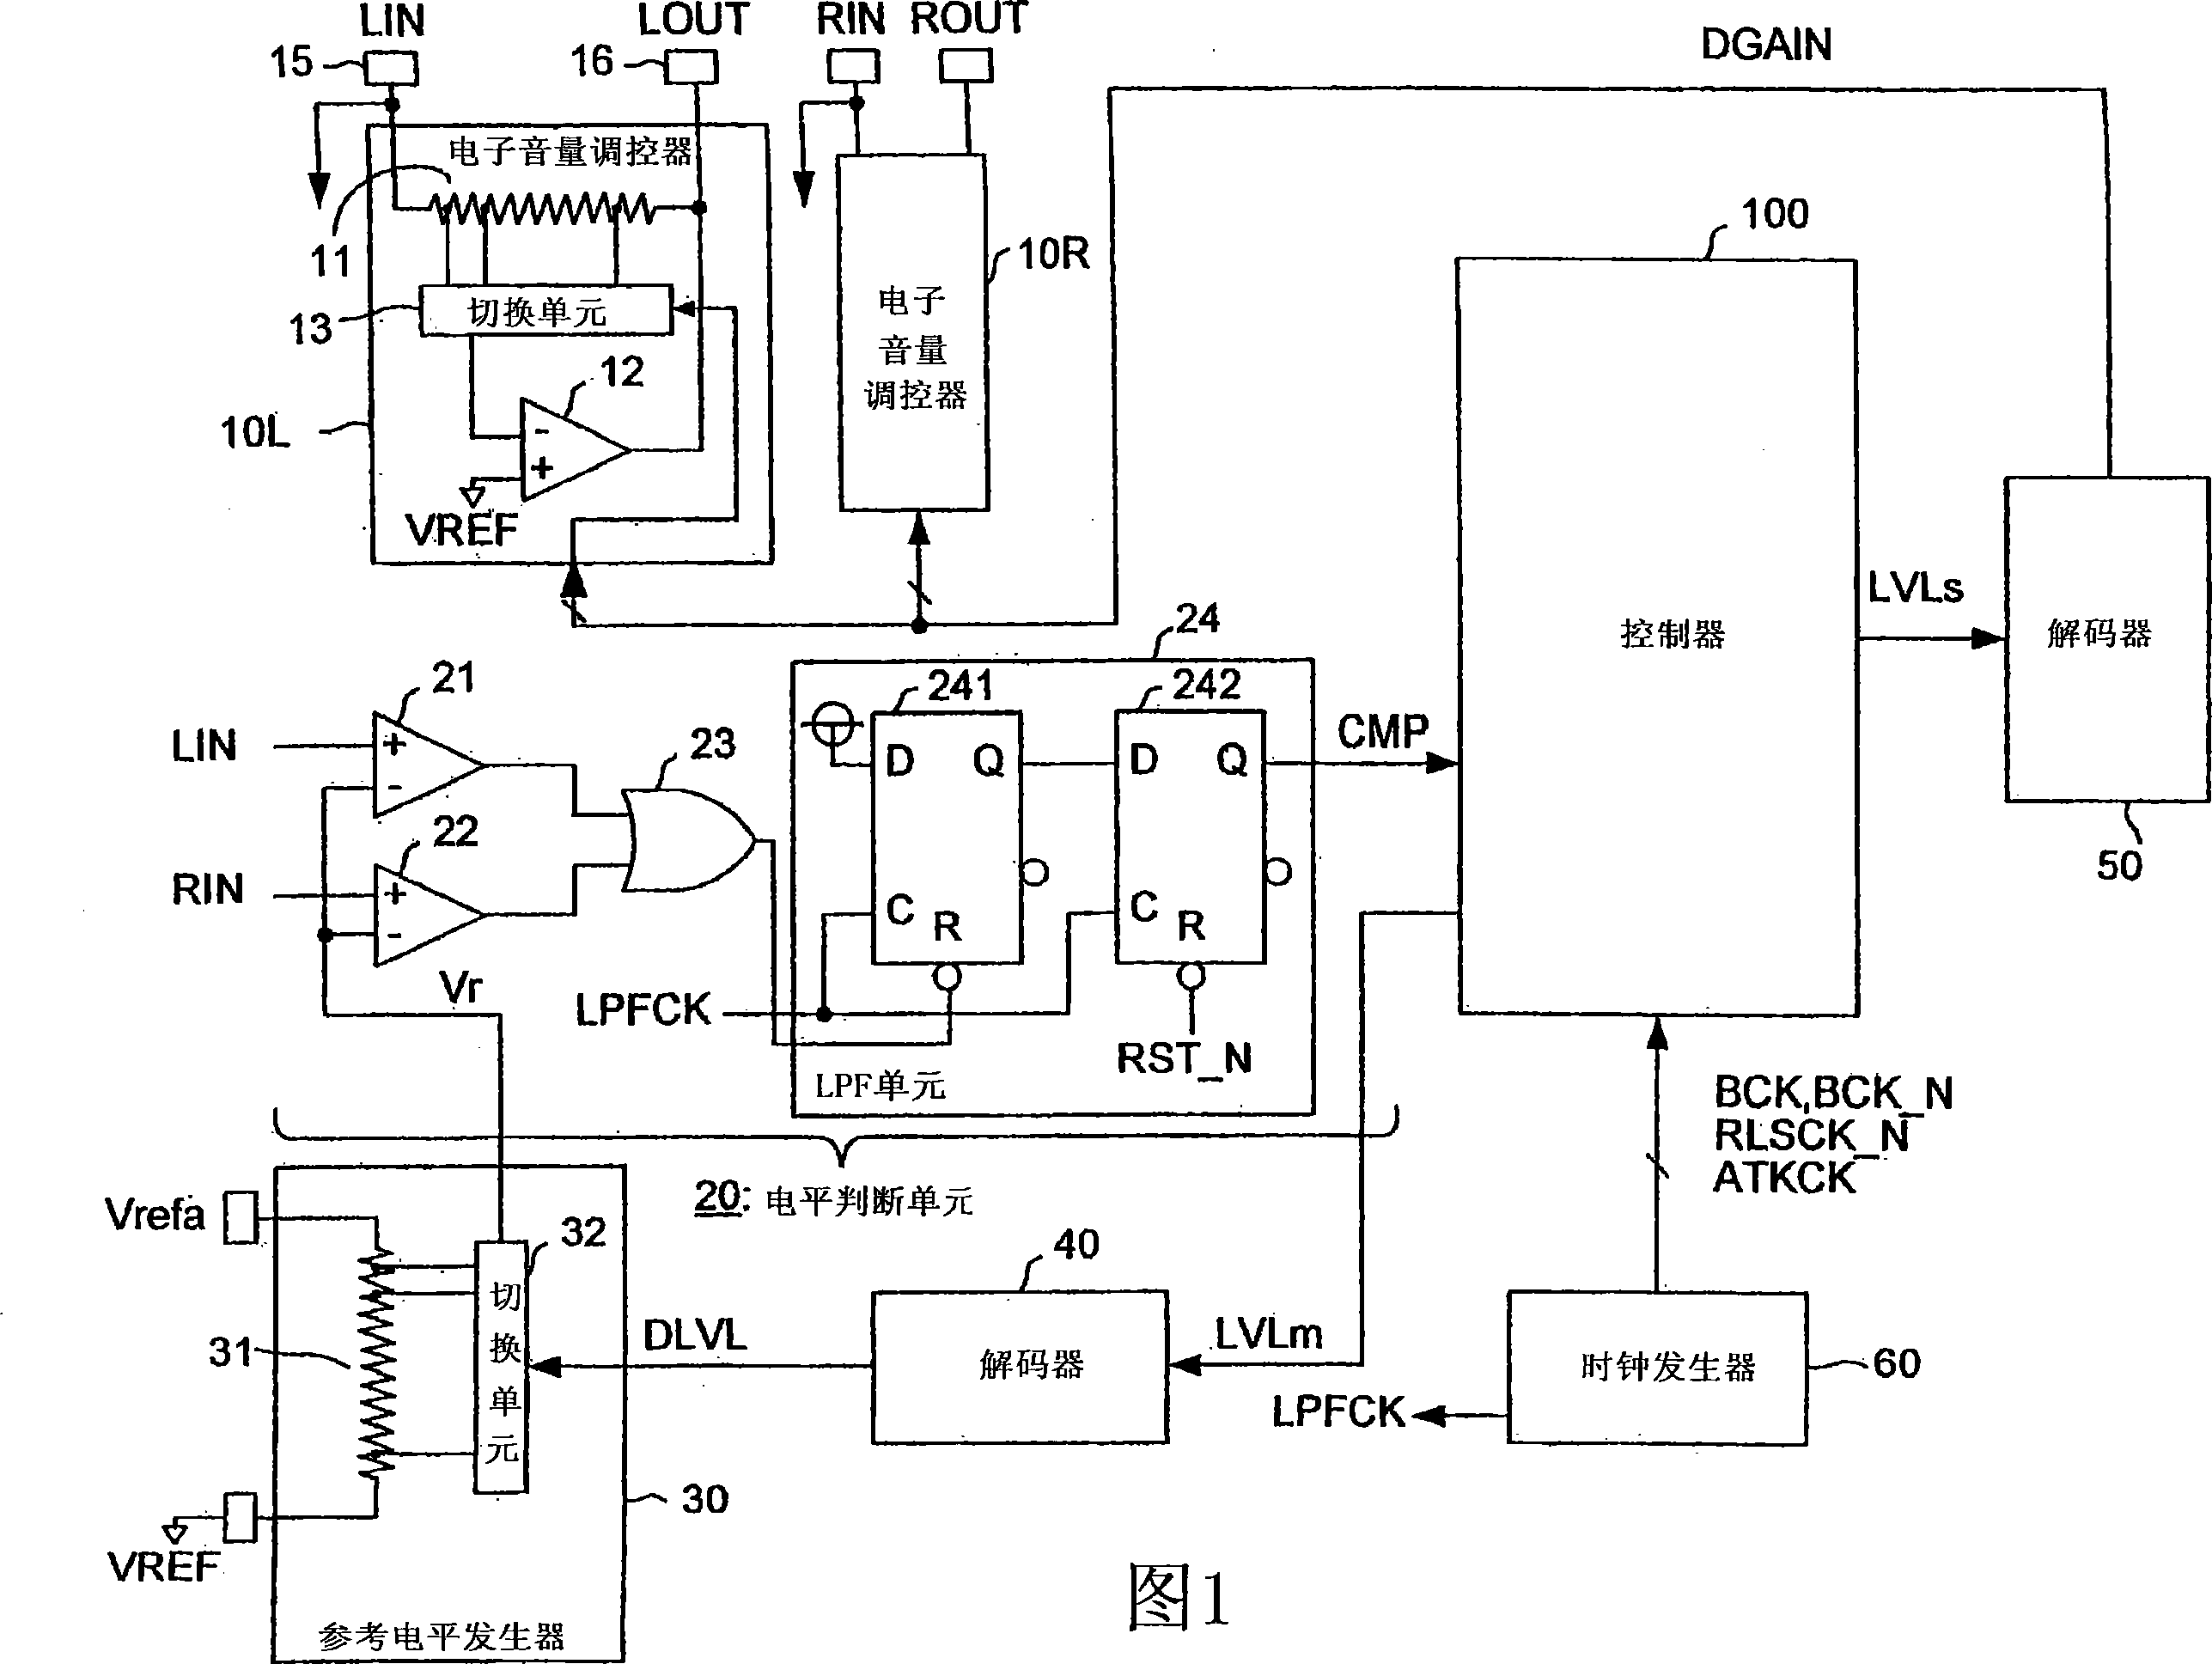 Automatic gain control circuit